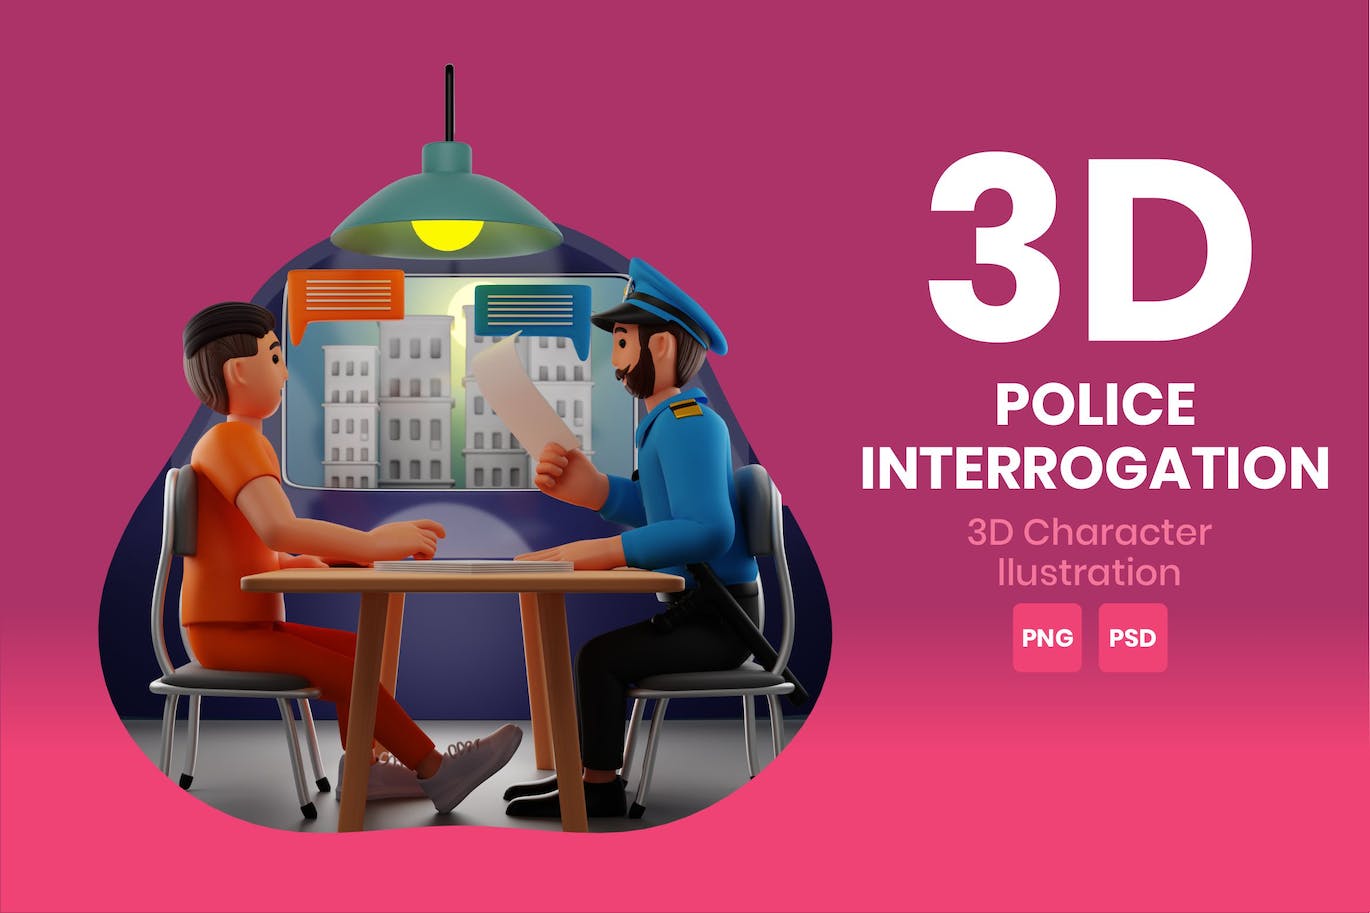 警察讯问3D角色插画素材 Police Interrogation 3D Character Illustration 图片素材 第1张